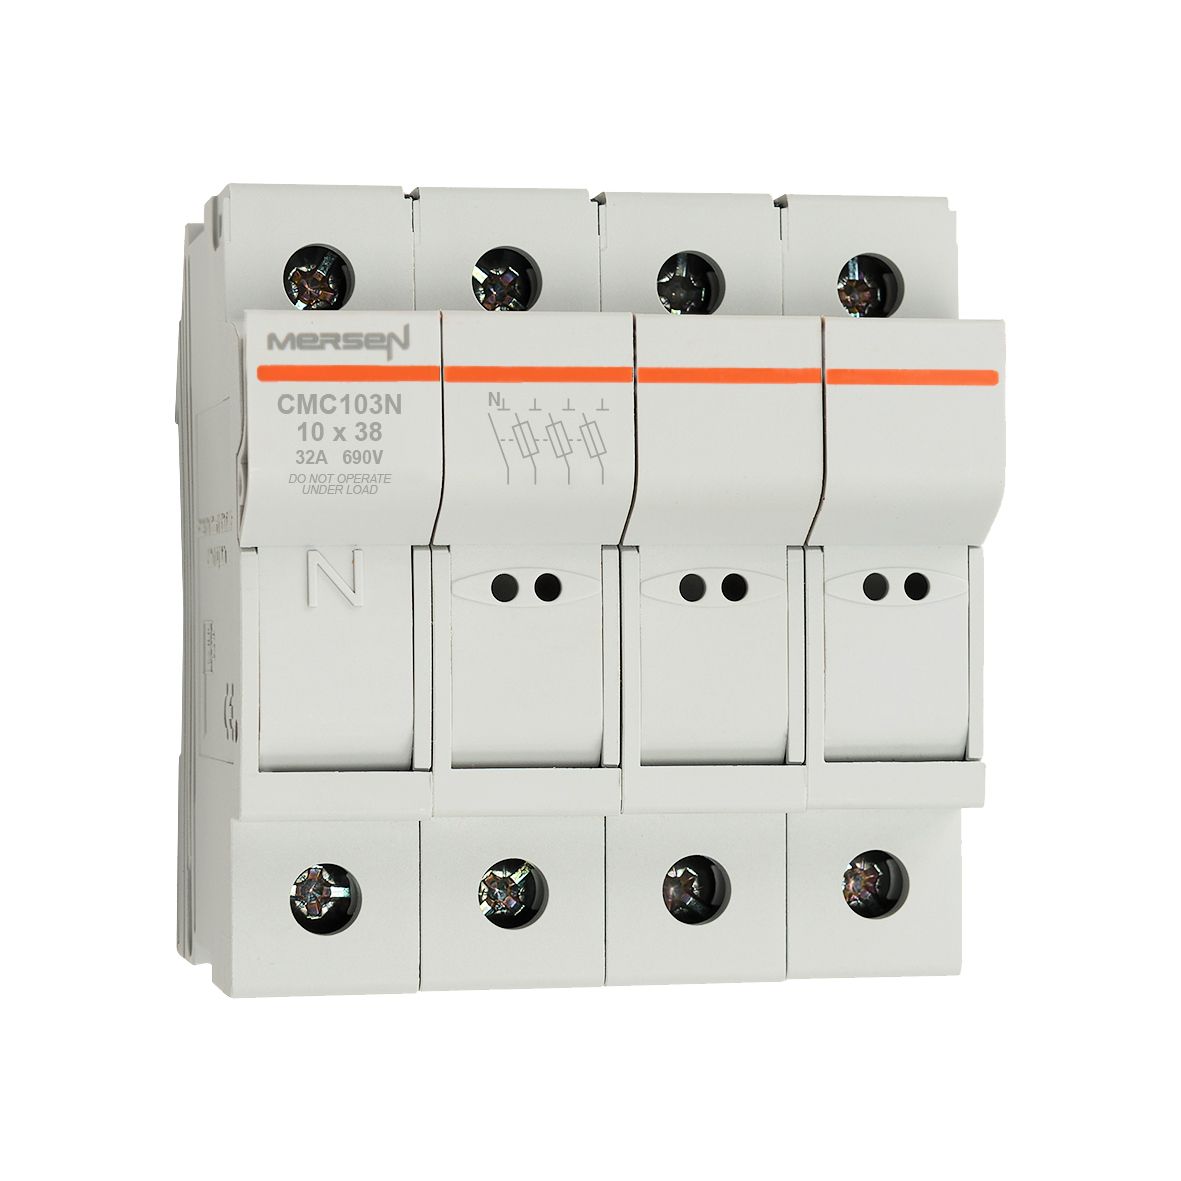 Y1062690 - CMC10 modular fuse holder, IEC, 3P+N, 10x38, DIN rail mounting, IP20